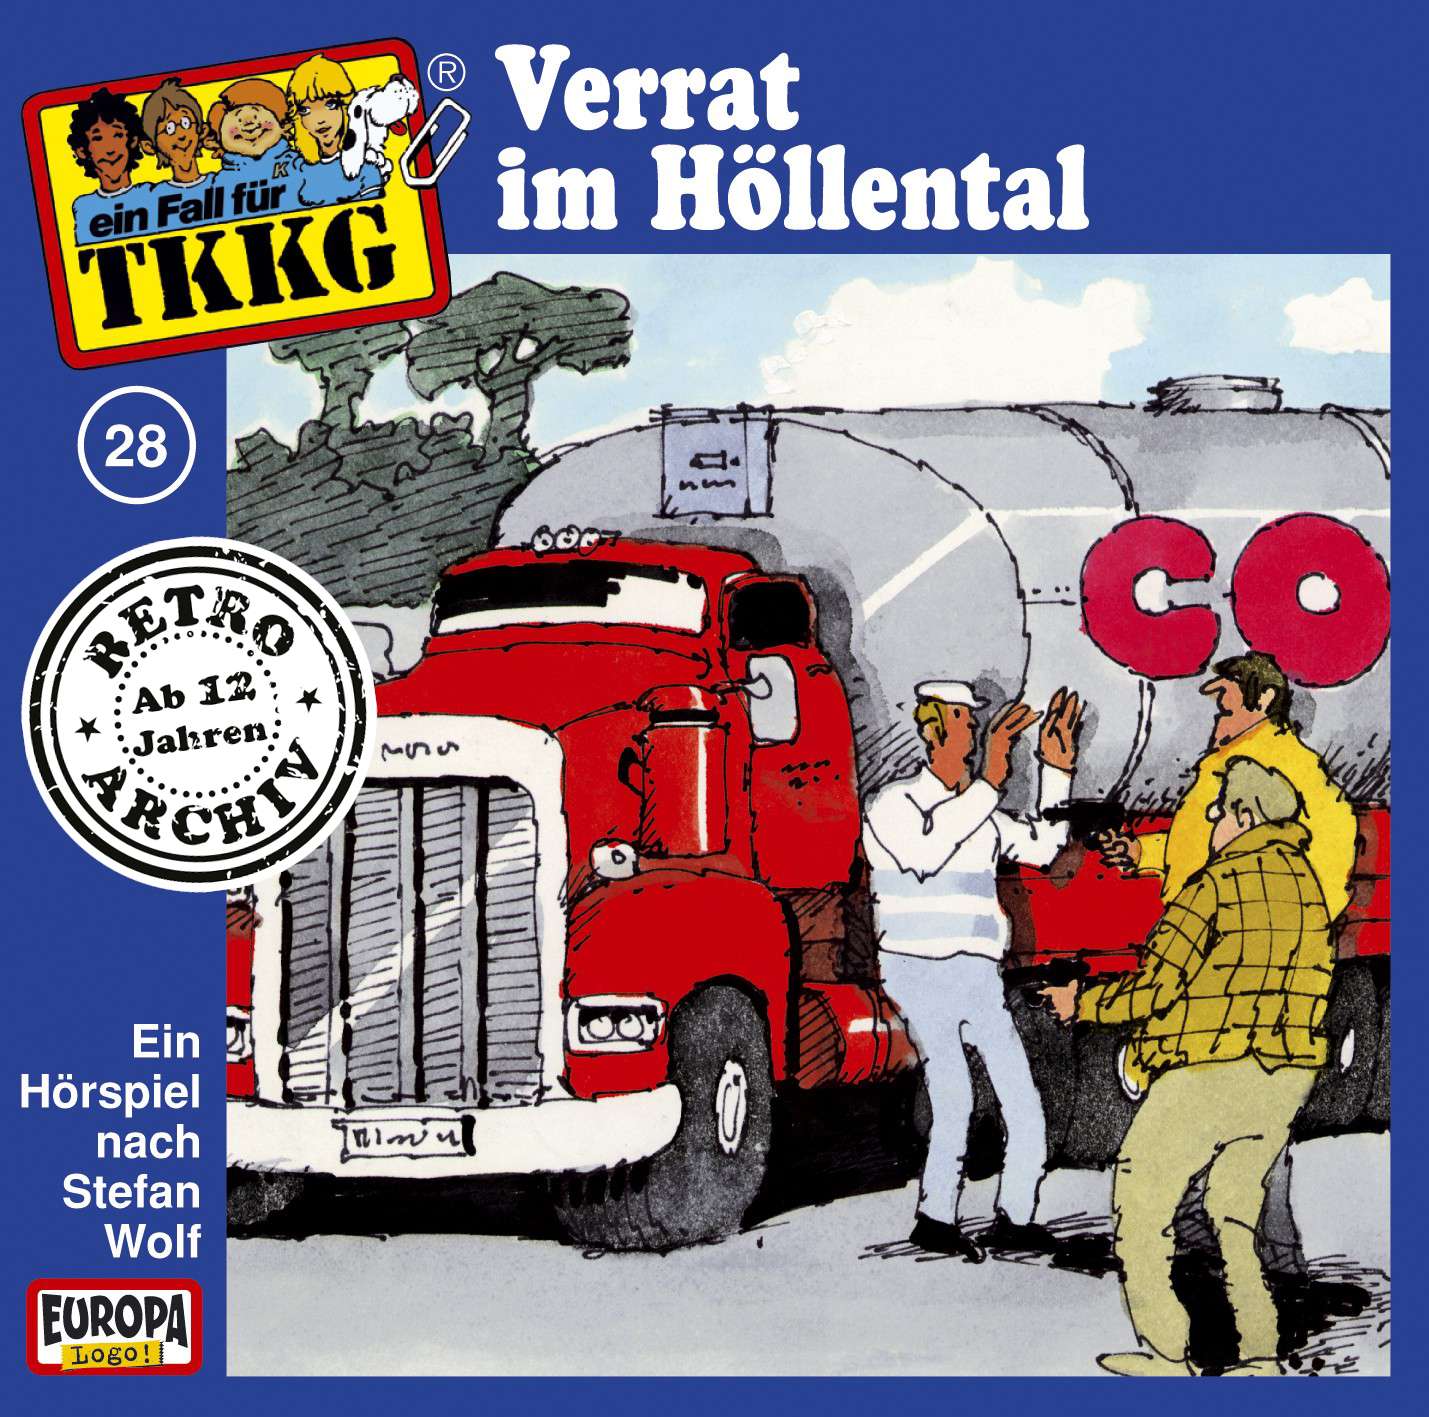 TKKG Retro-Archiv - Verrat im Höllental